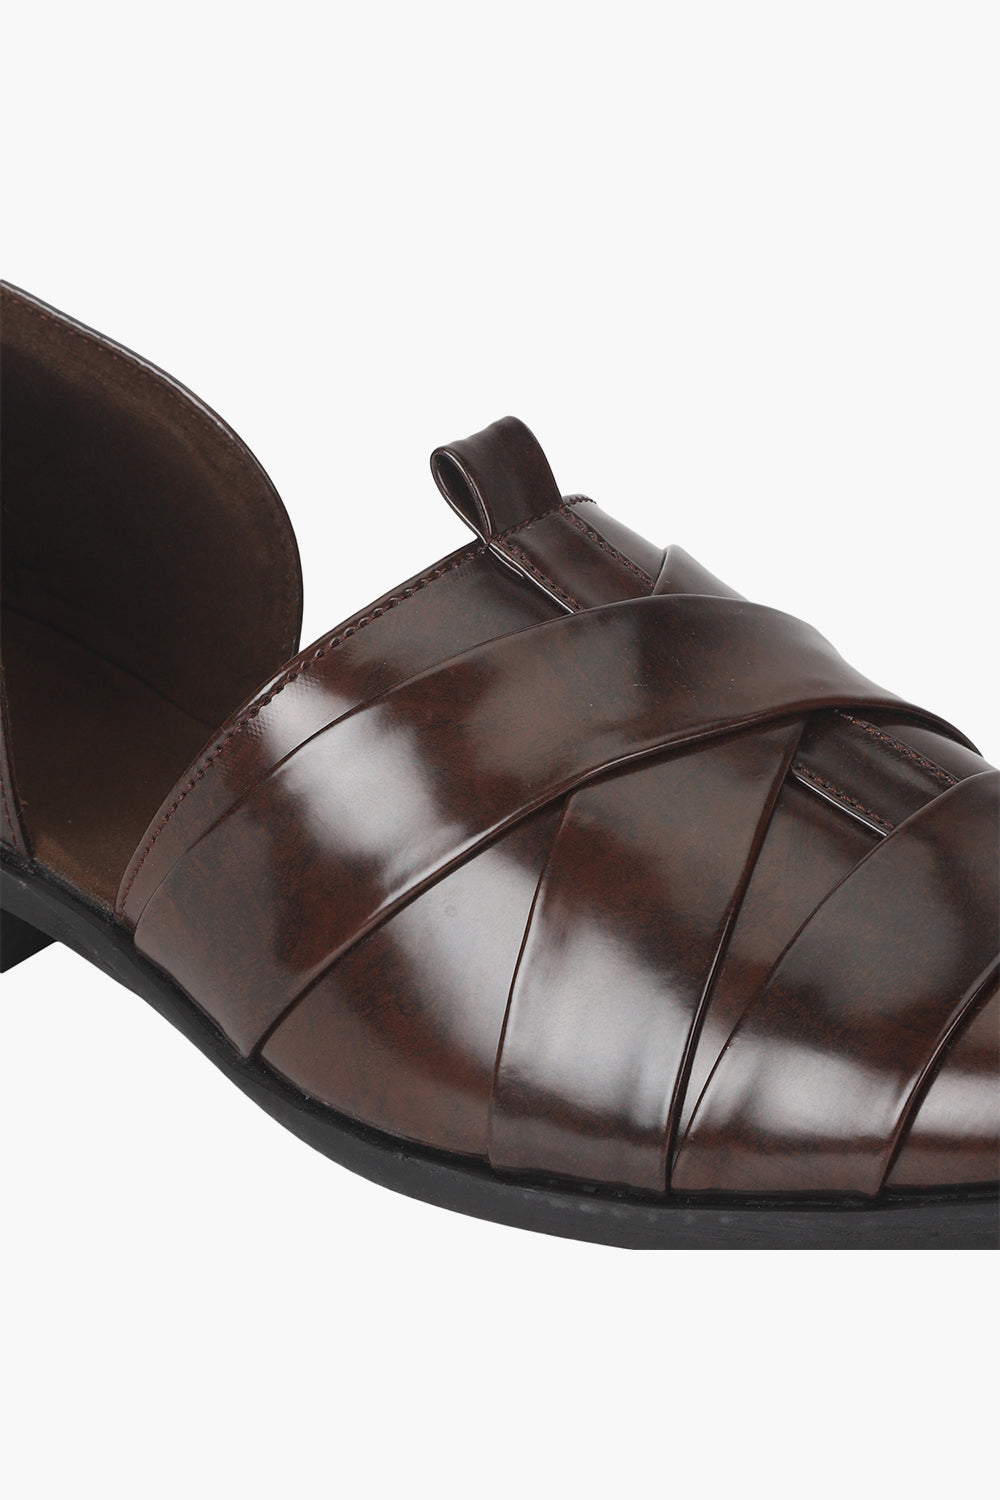 Buy JHAMNANI 5081 Men's Loafer Stylish Ethnic Peshawari Nagra Mojadi Sherwani  Sandals Wedding Latest Kolhapuri Brown Tan Black Shoes for Men Size 6 UK at  Amazon.in